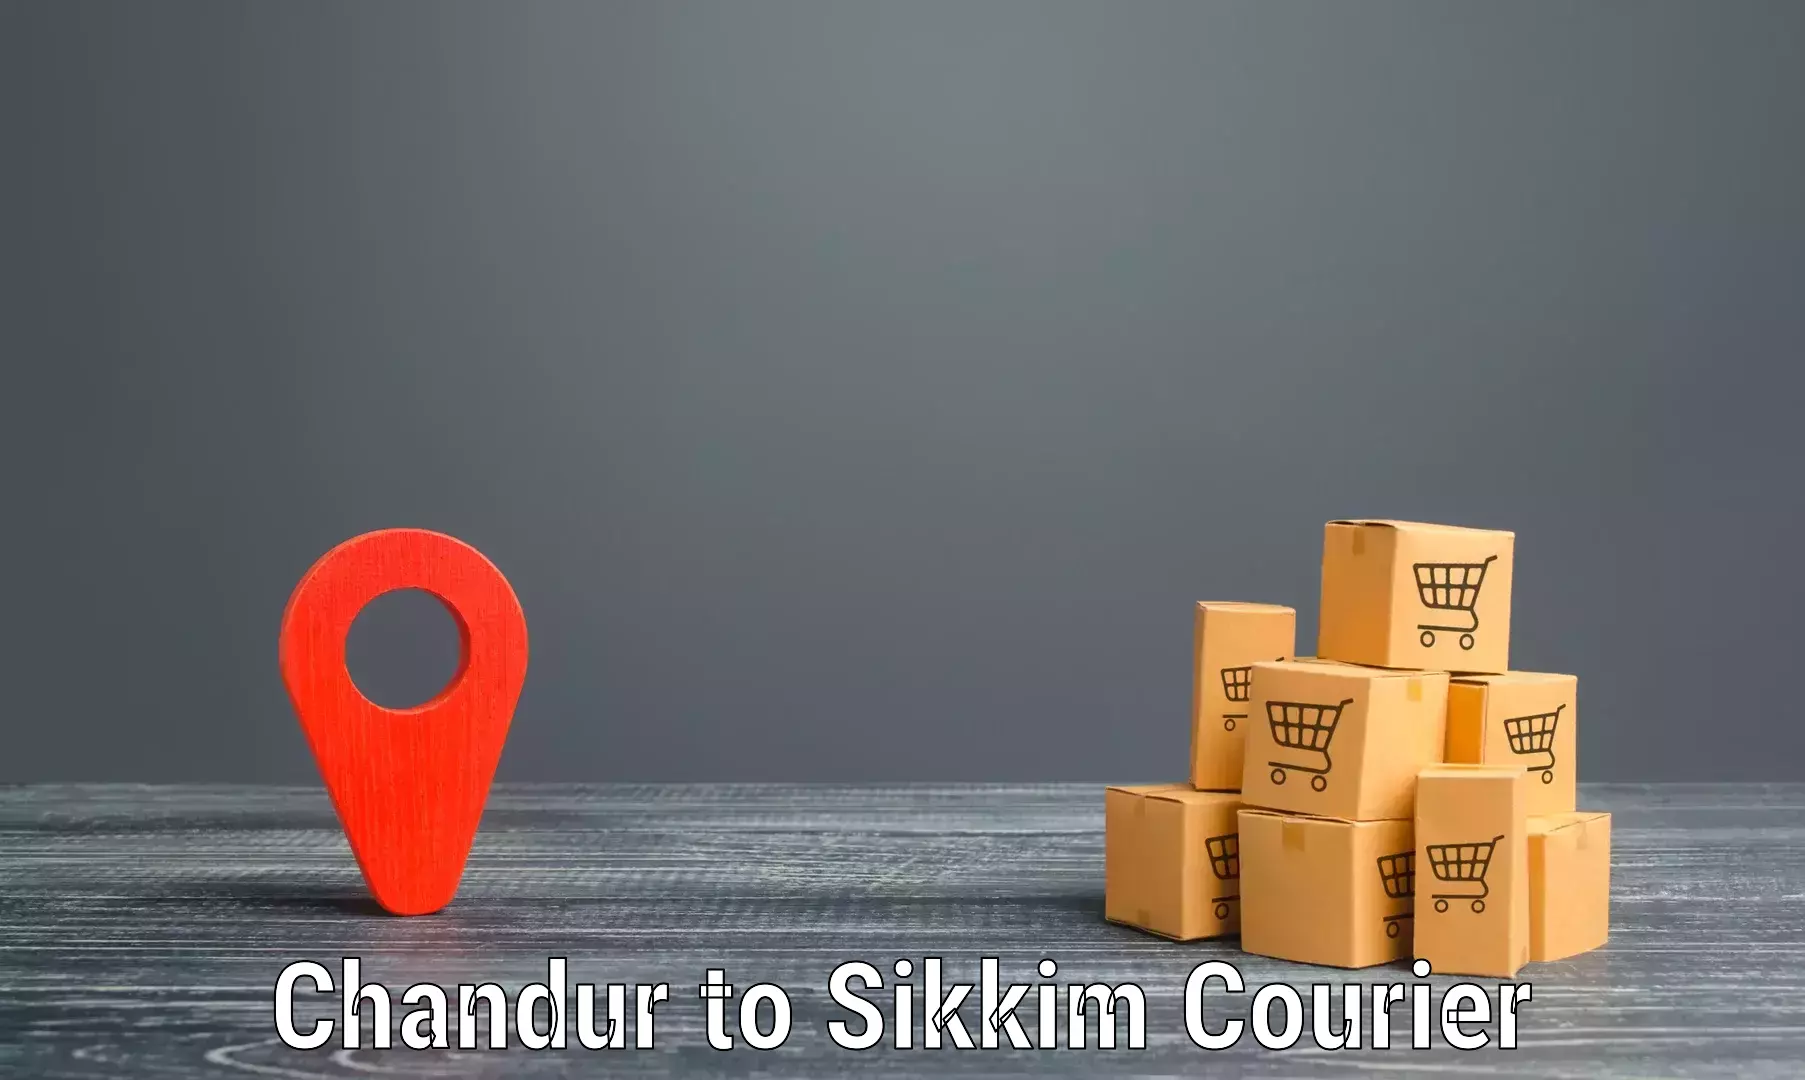 Courier service comparison Chandur to East Sikkim